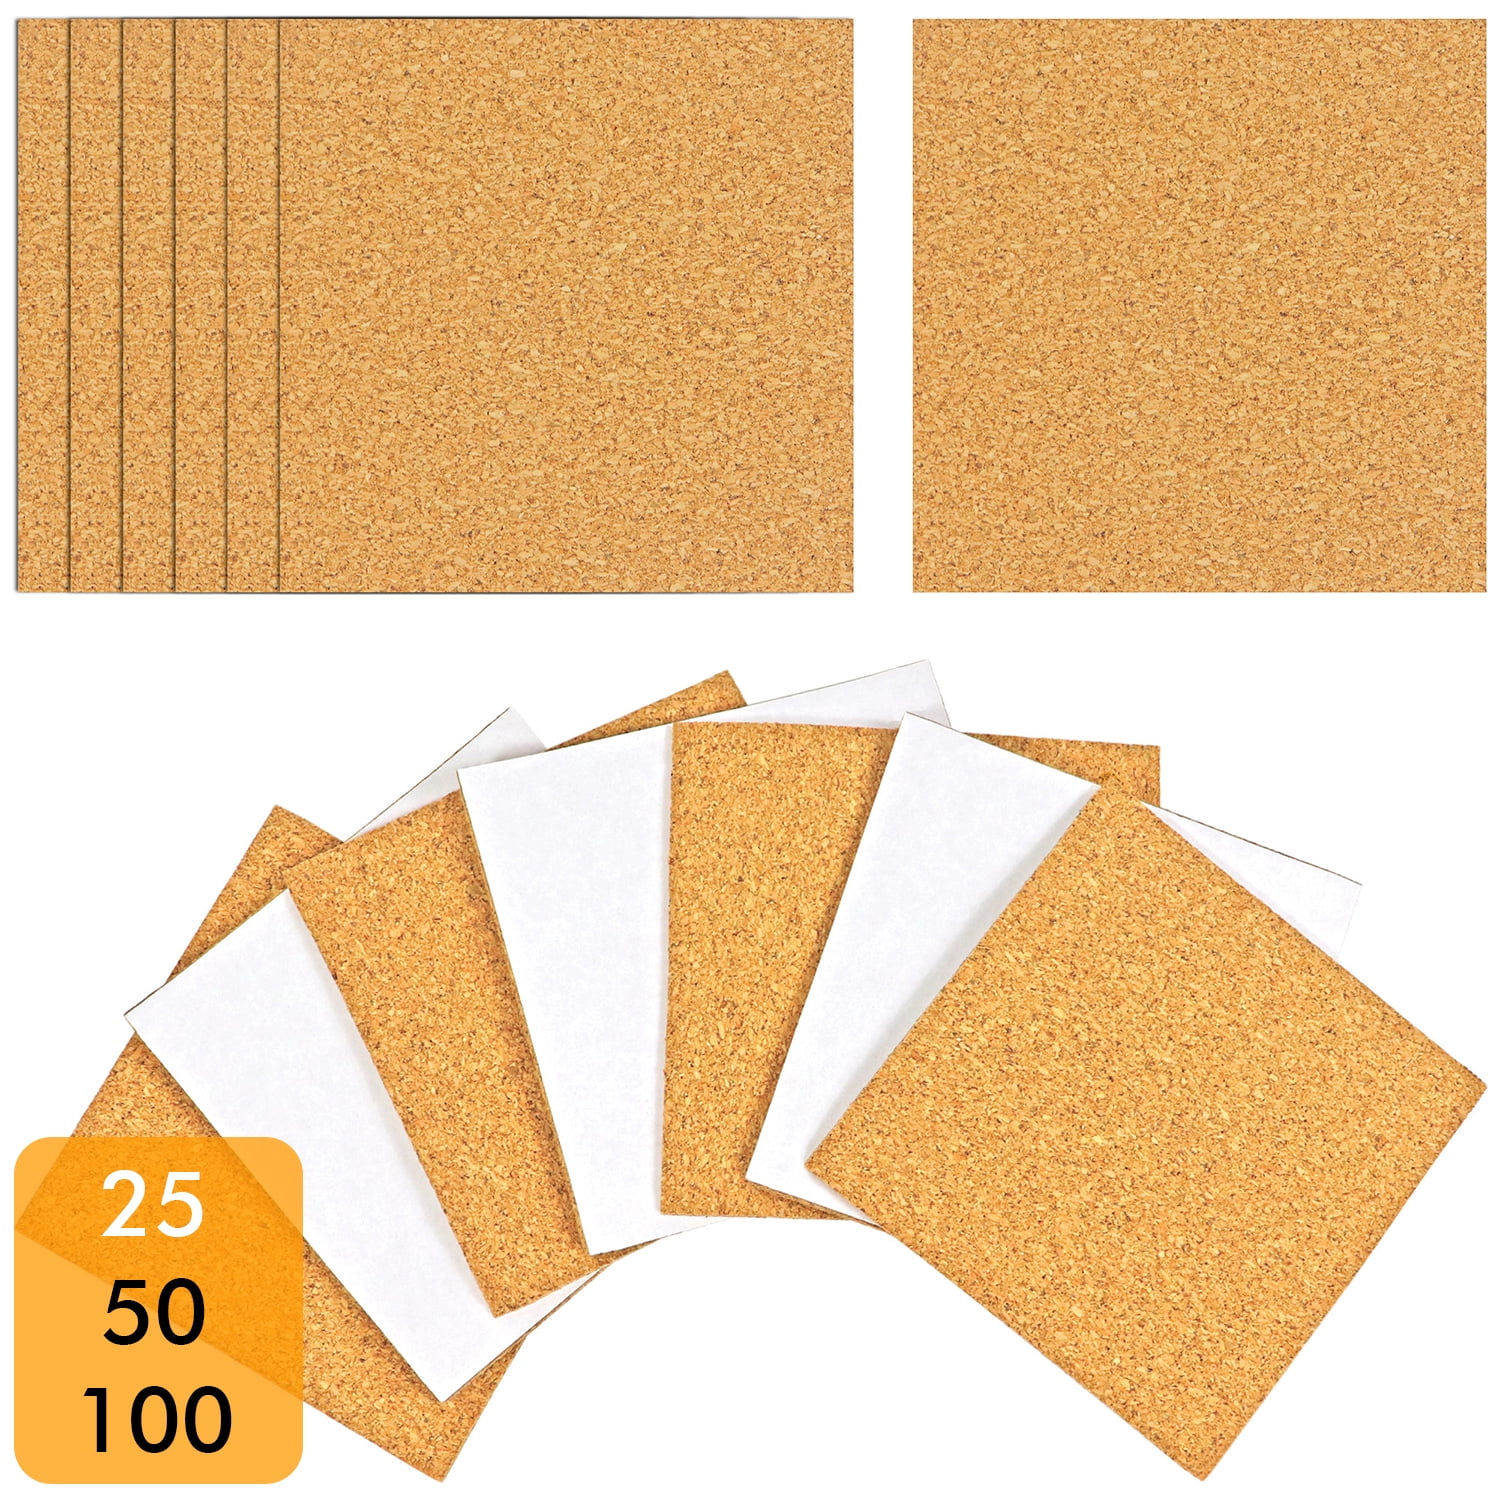 4"x 4" Backing Sheets Mini... Apipi 40 Pack Self-Adhesive Cork Squares 